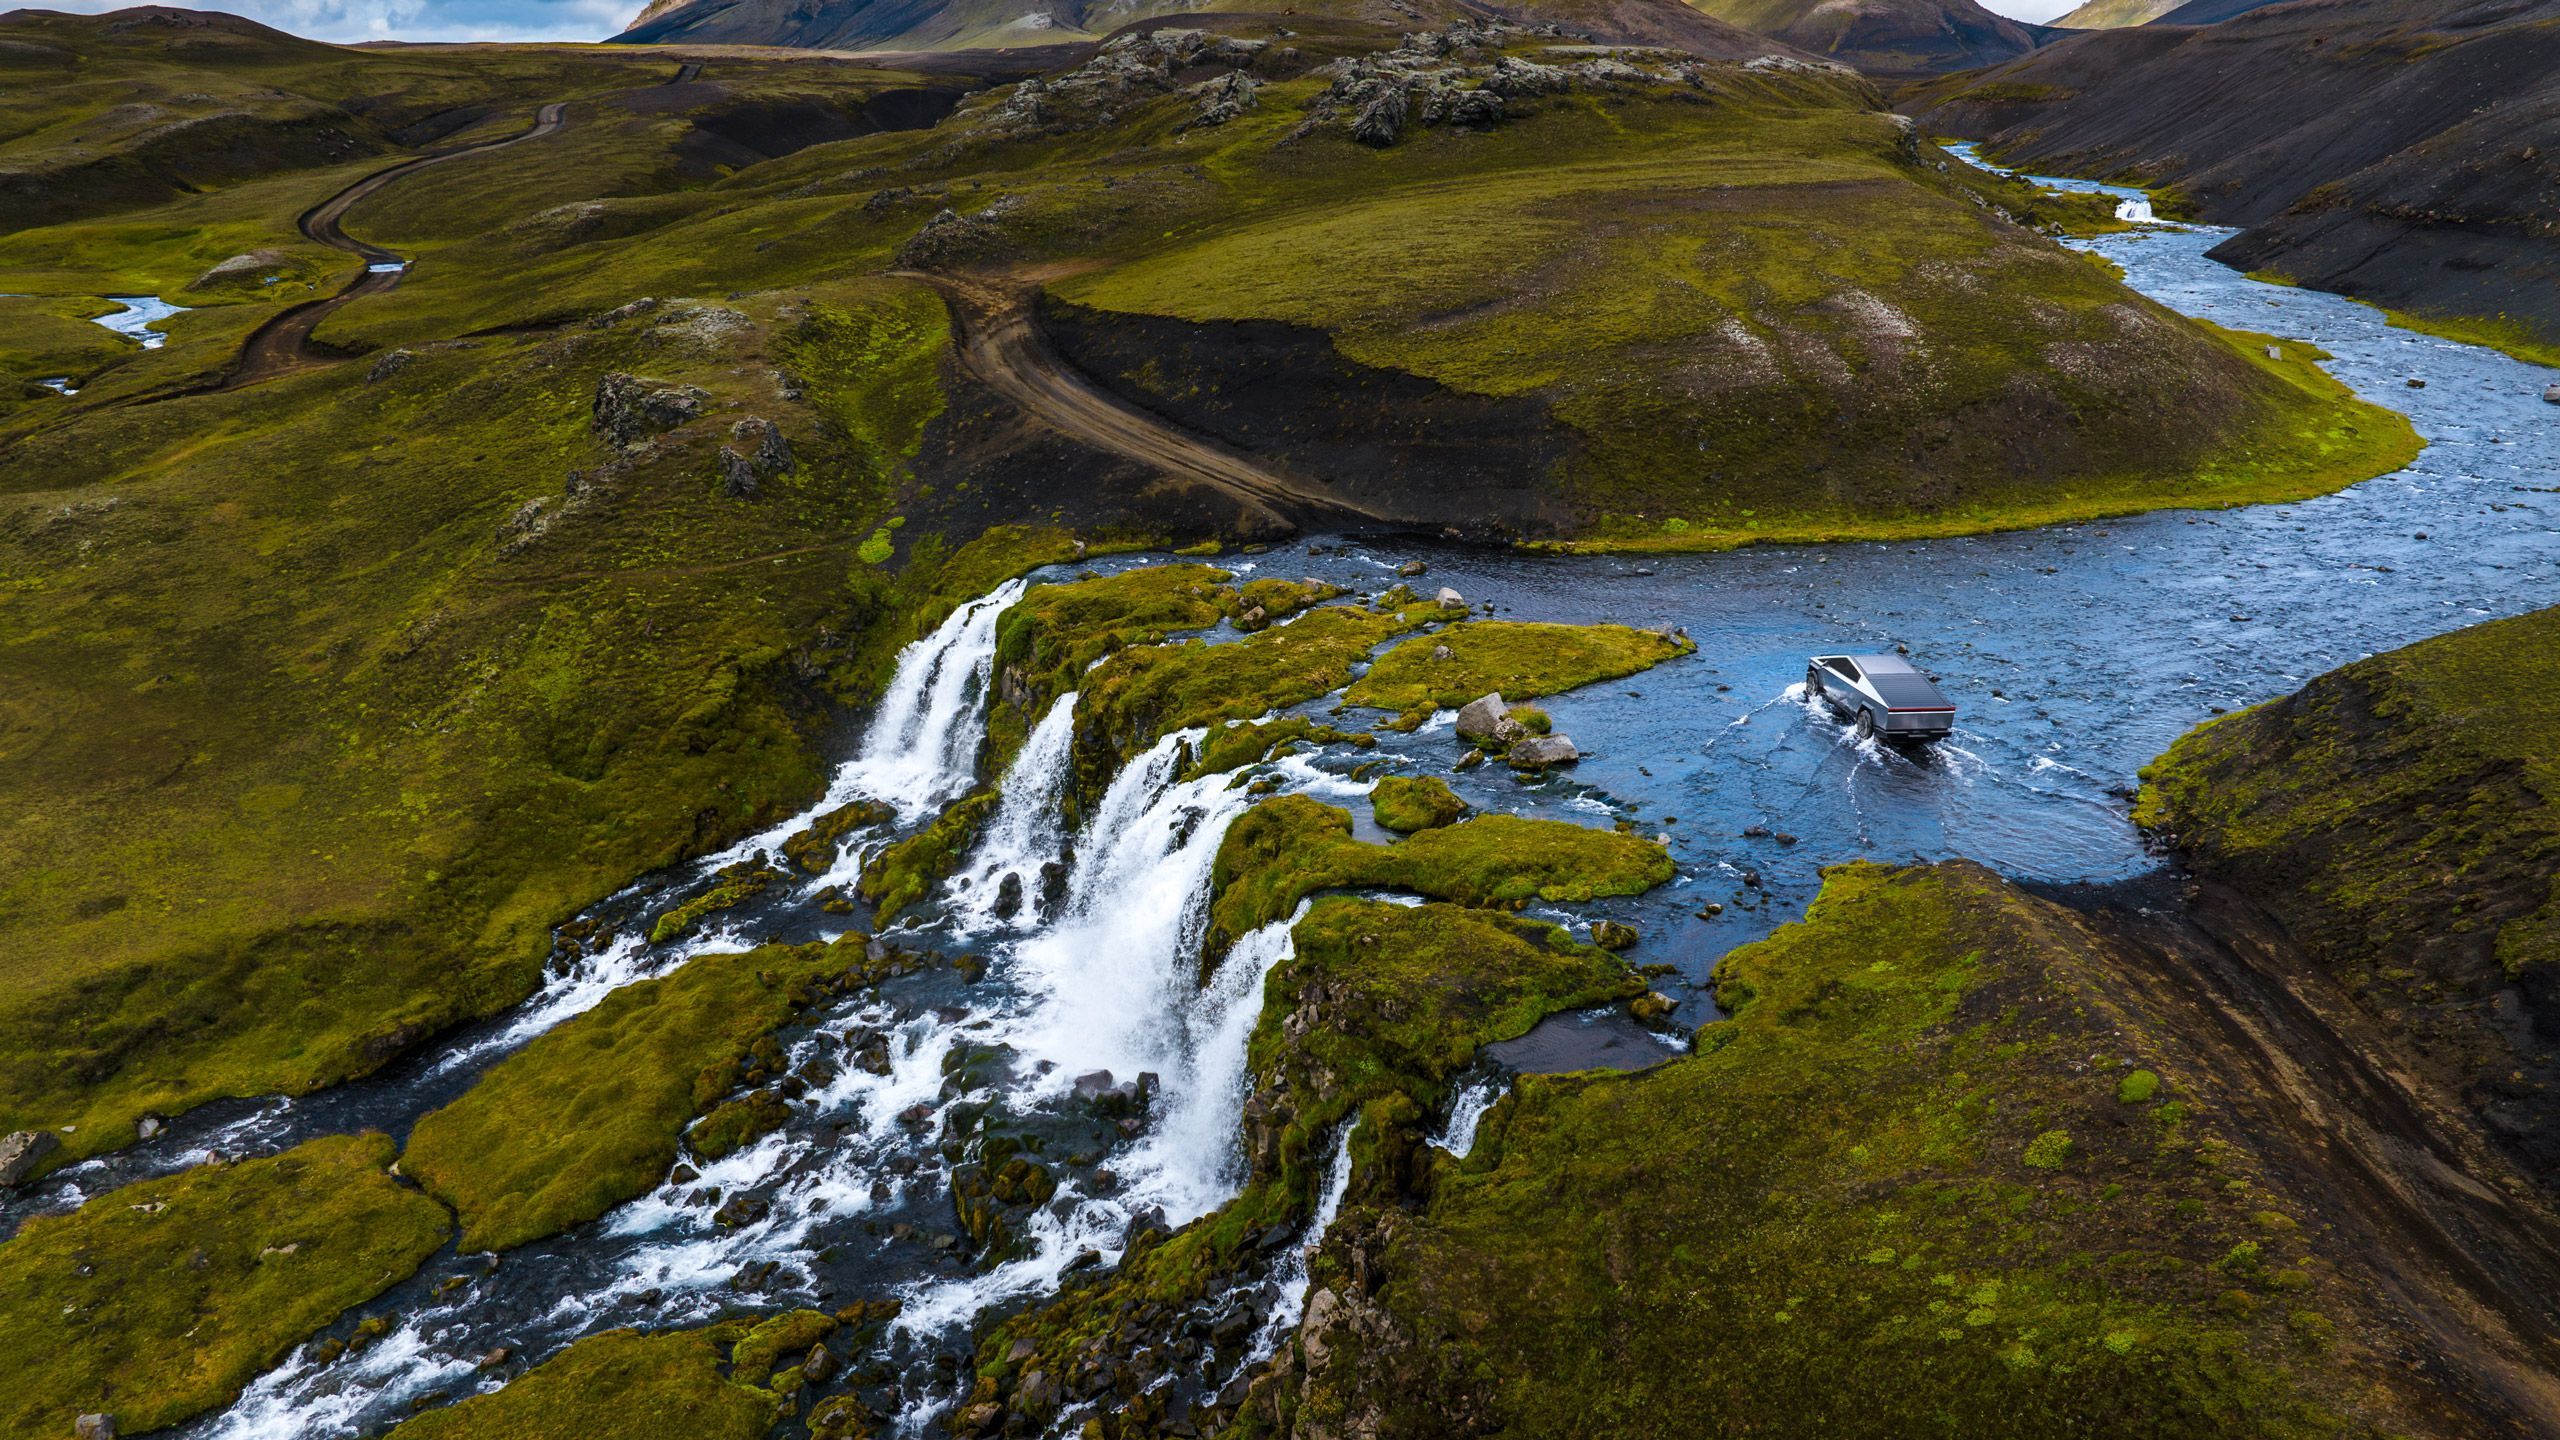 A Tesla Cybertruck crosses a river in a tundra